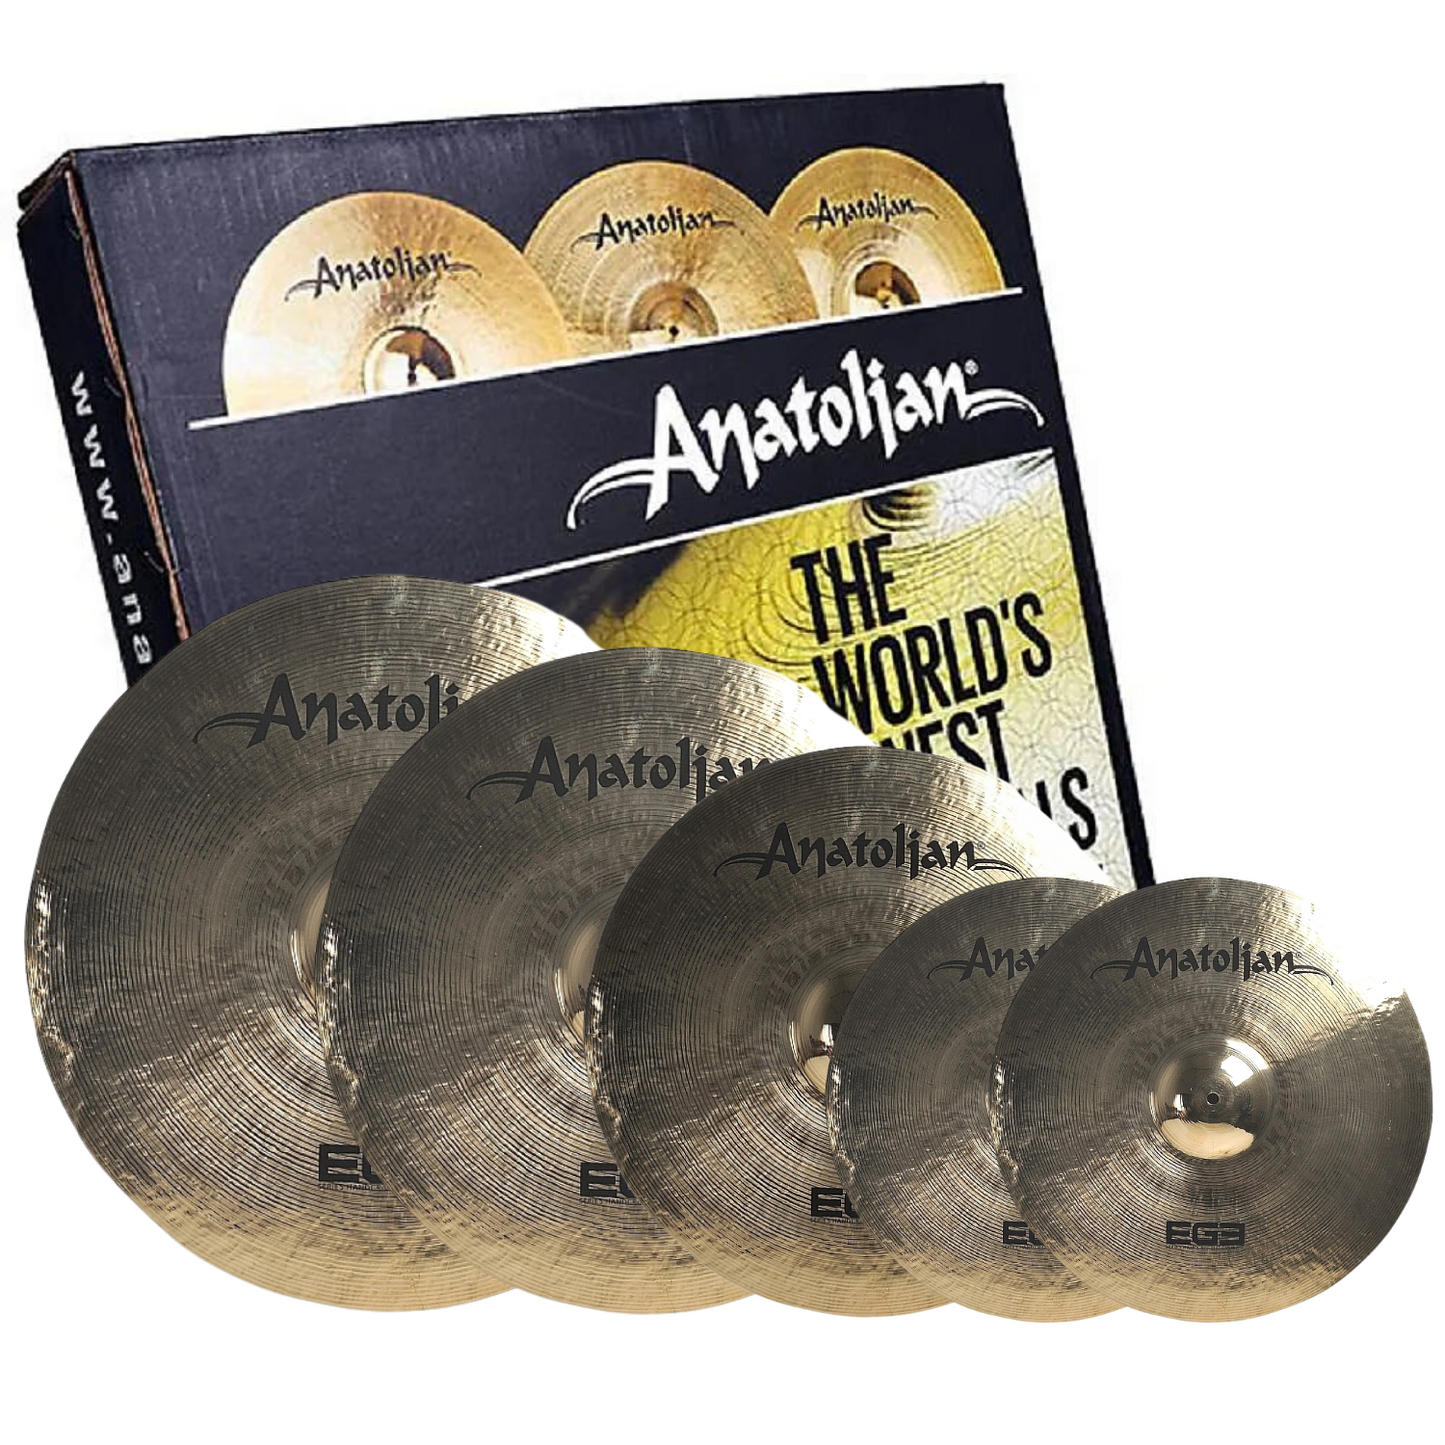 Anatolian Cymbals Pack - 5pc EGE Series (14H, 16C, 18C, 21R)